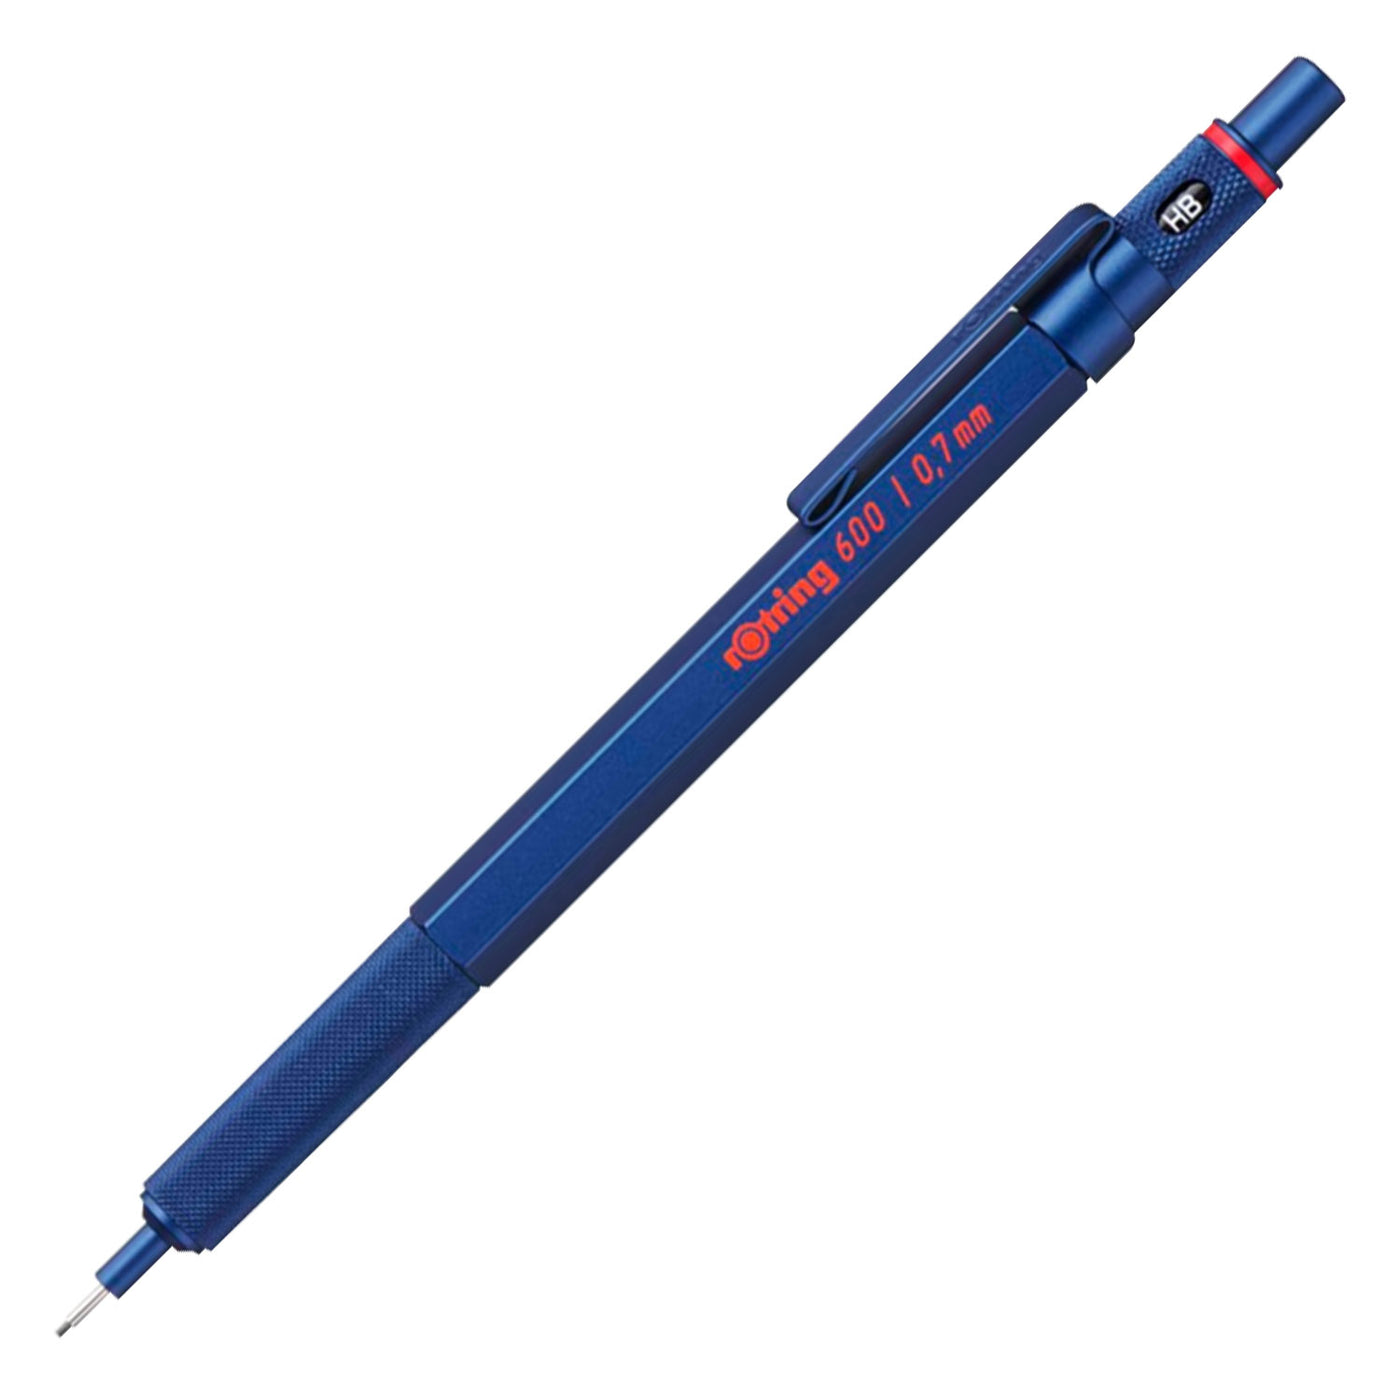 Rotring 600 0.7mm Mechanical Pencil - Blue 1